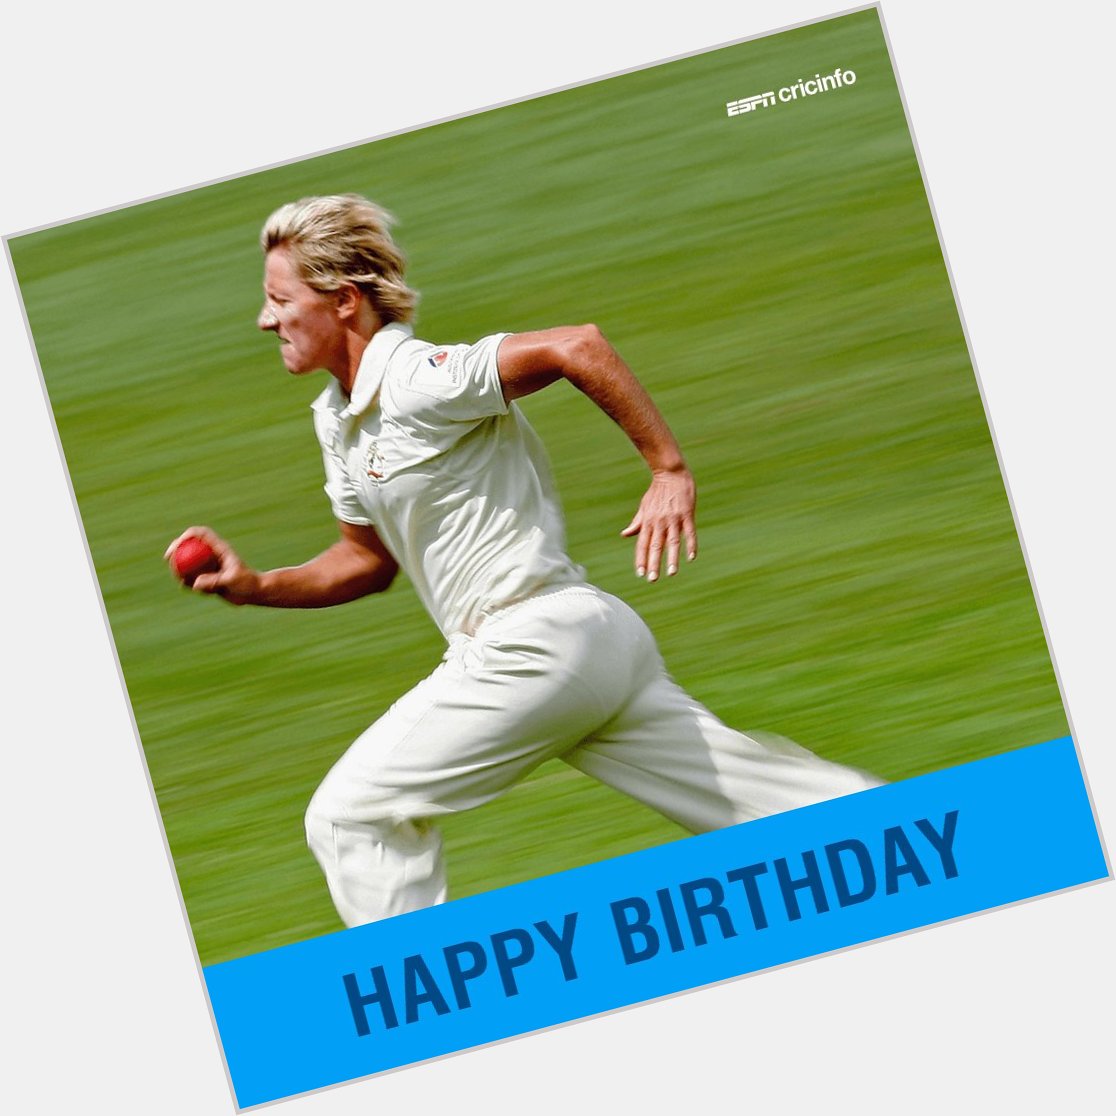  A happy 50th birthday to former Australia fast bowler Cathryn Fitzpatrick 

 